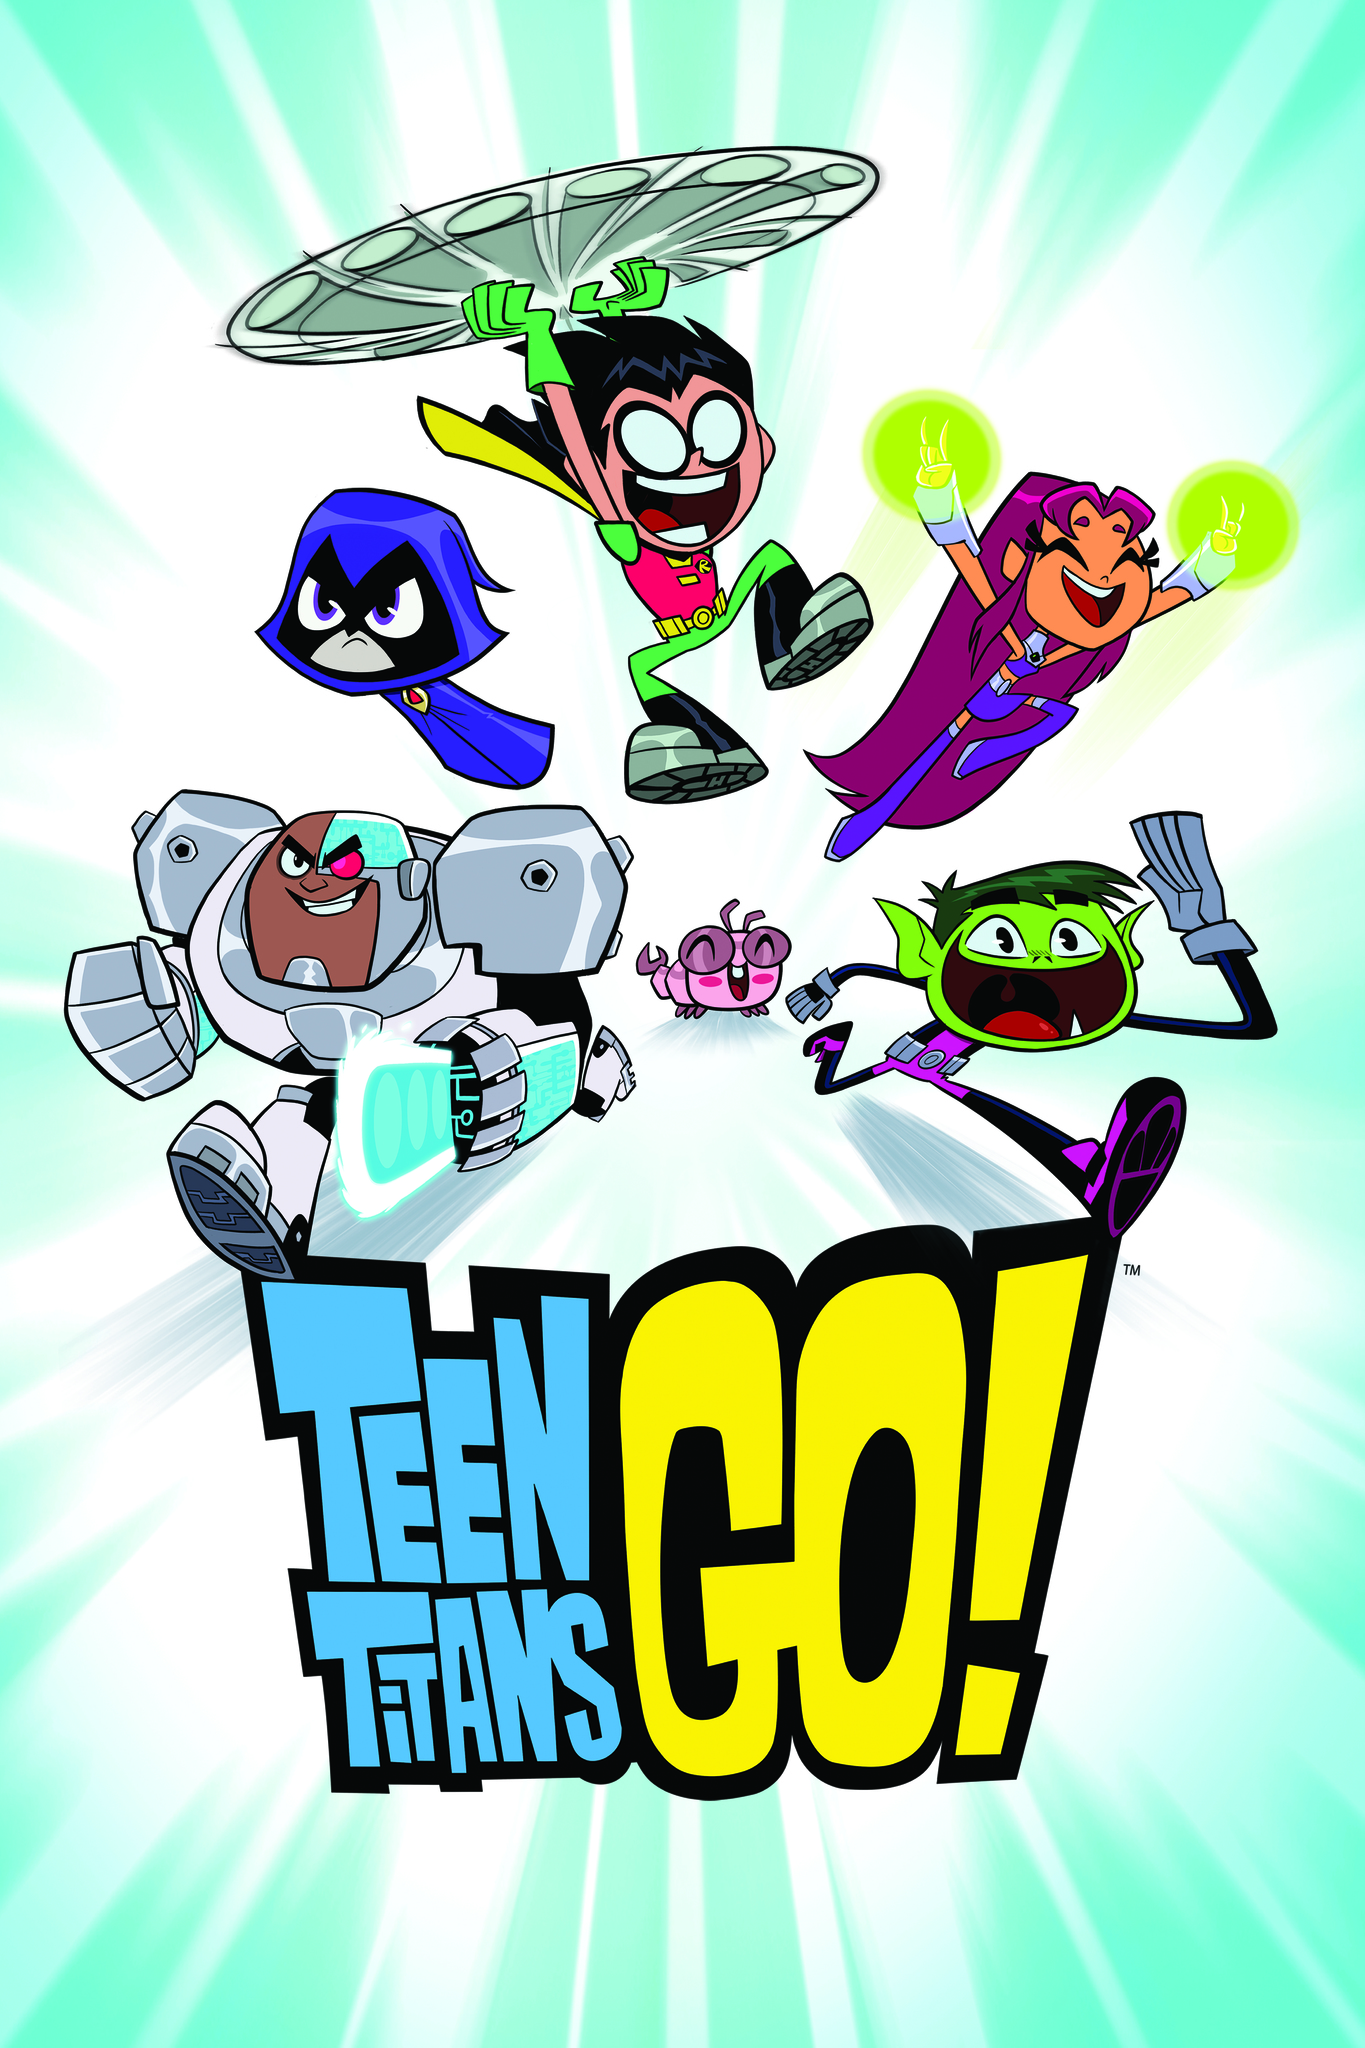 Teen titans first episode go